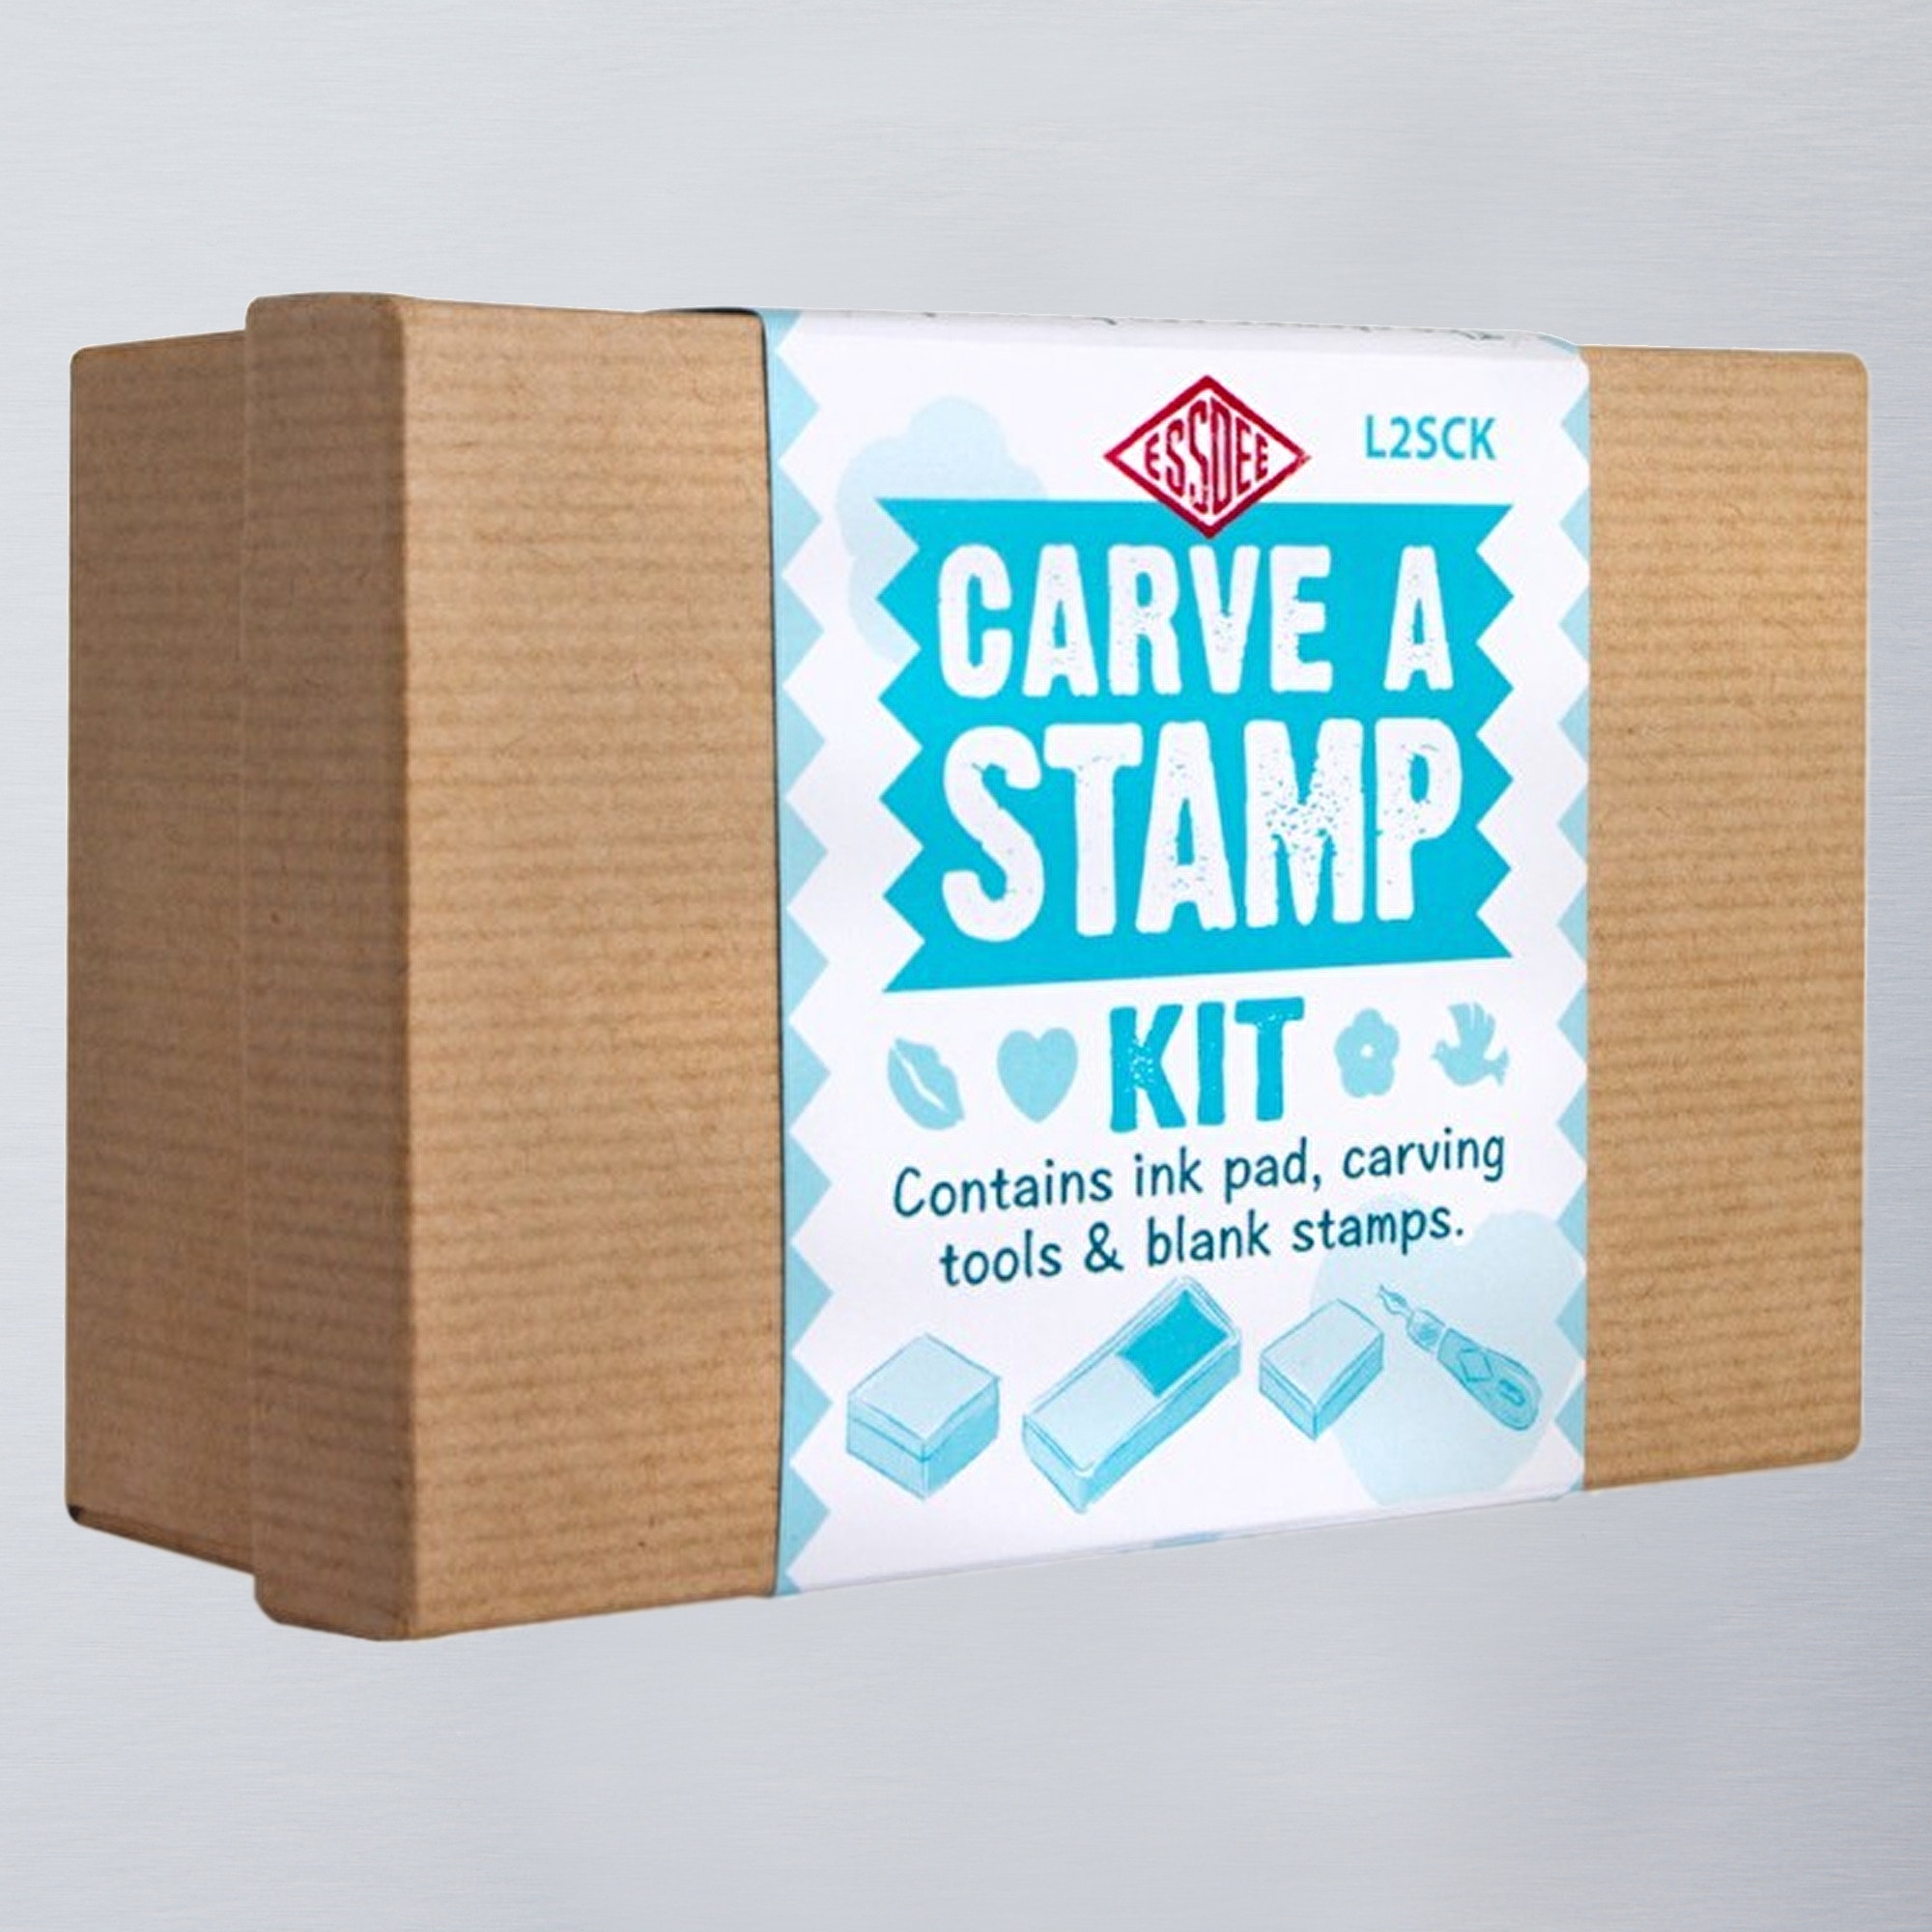 Carve a stamp kit